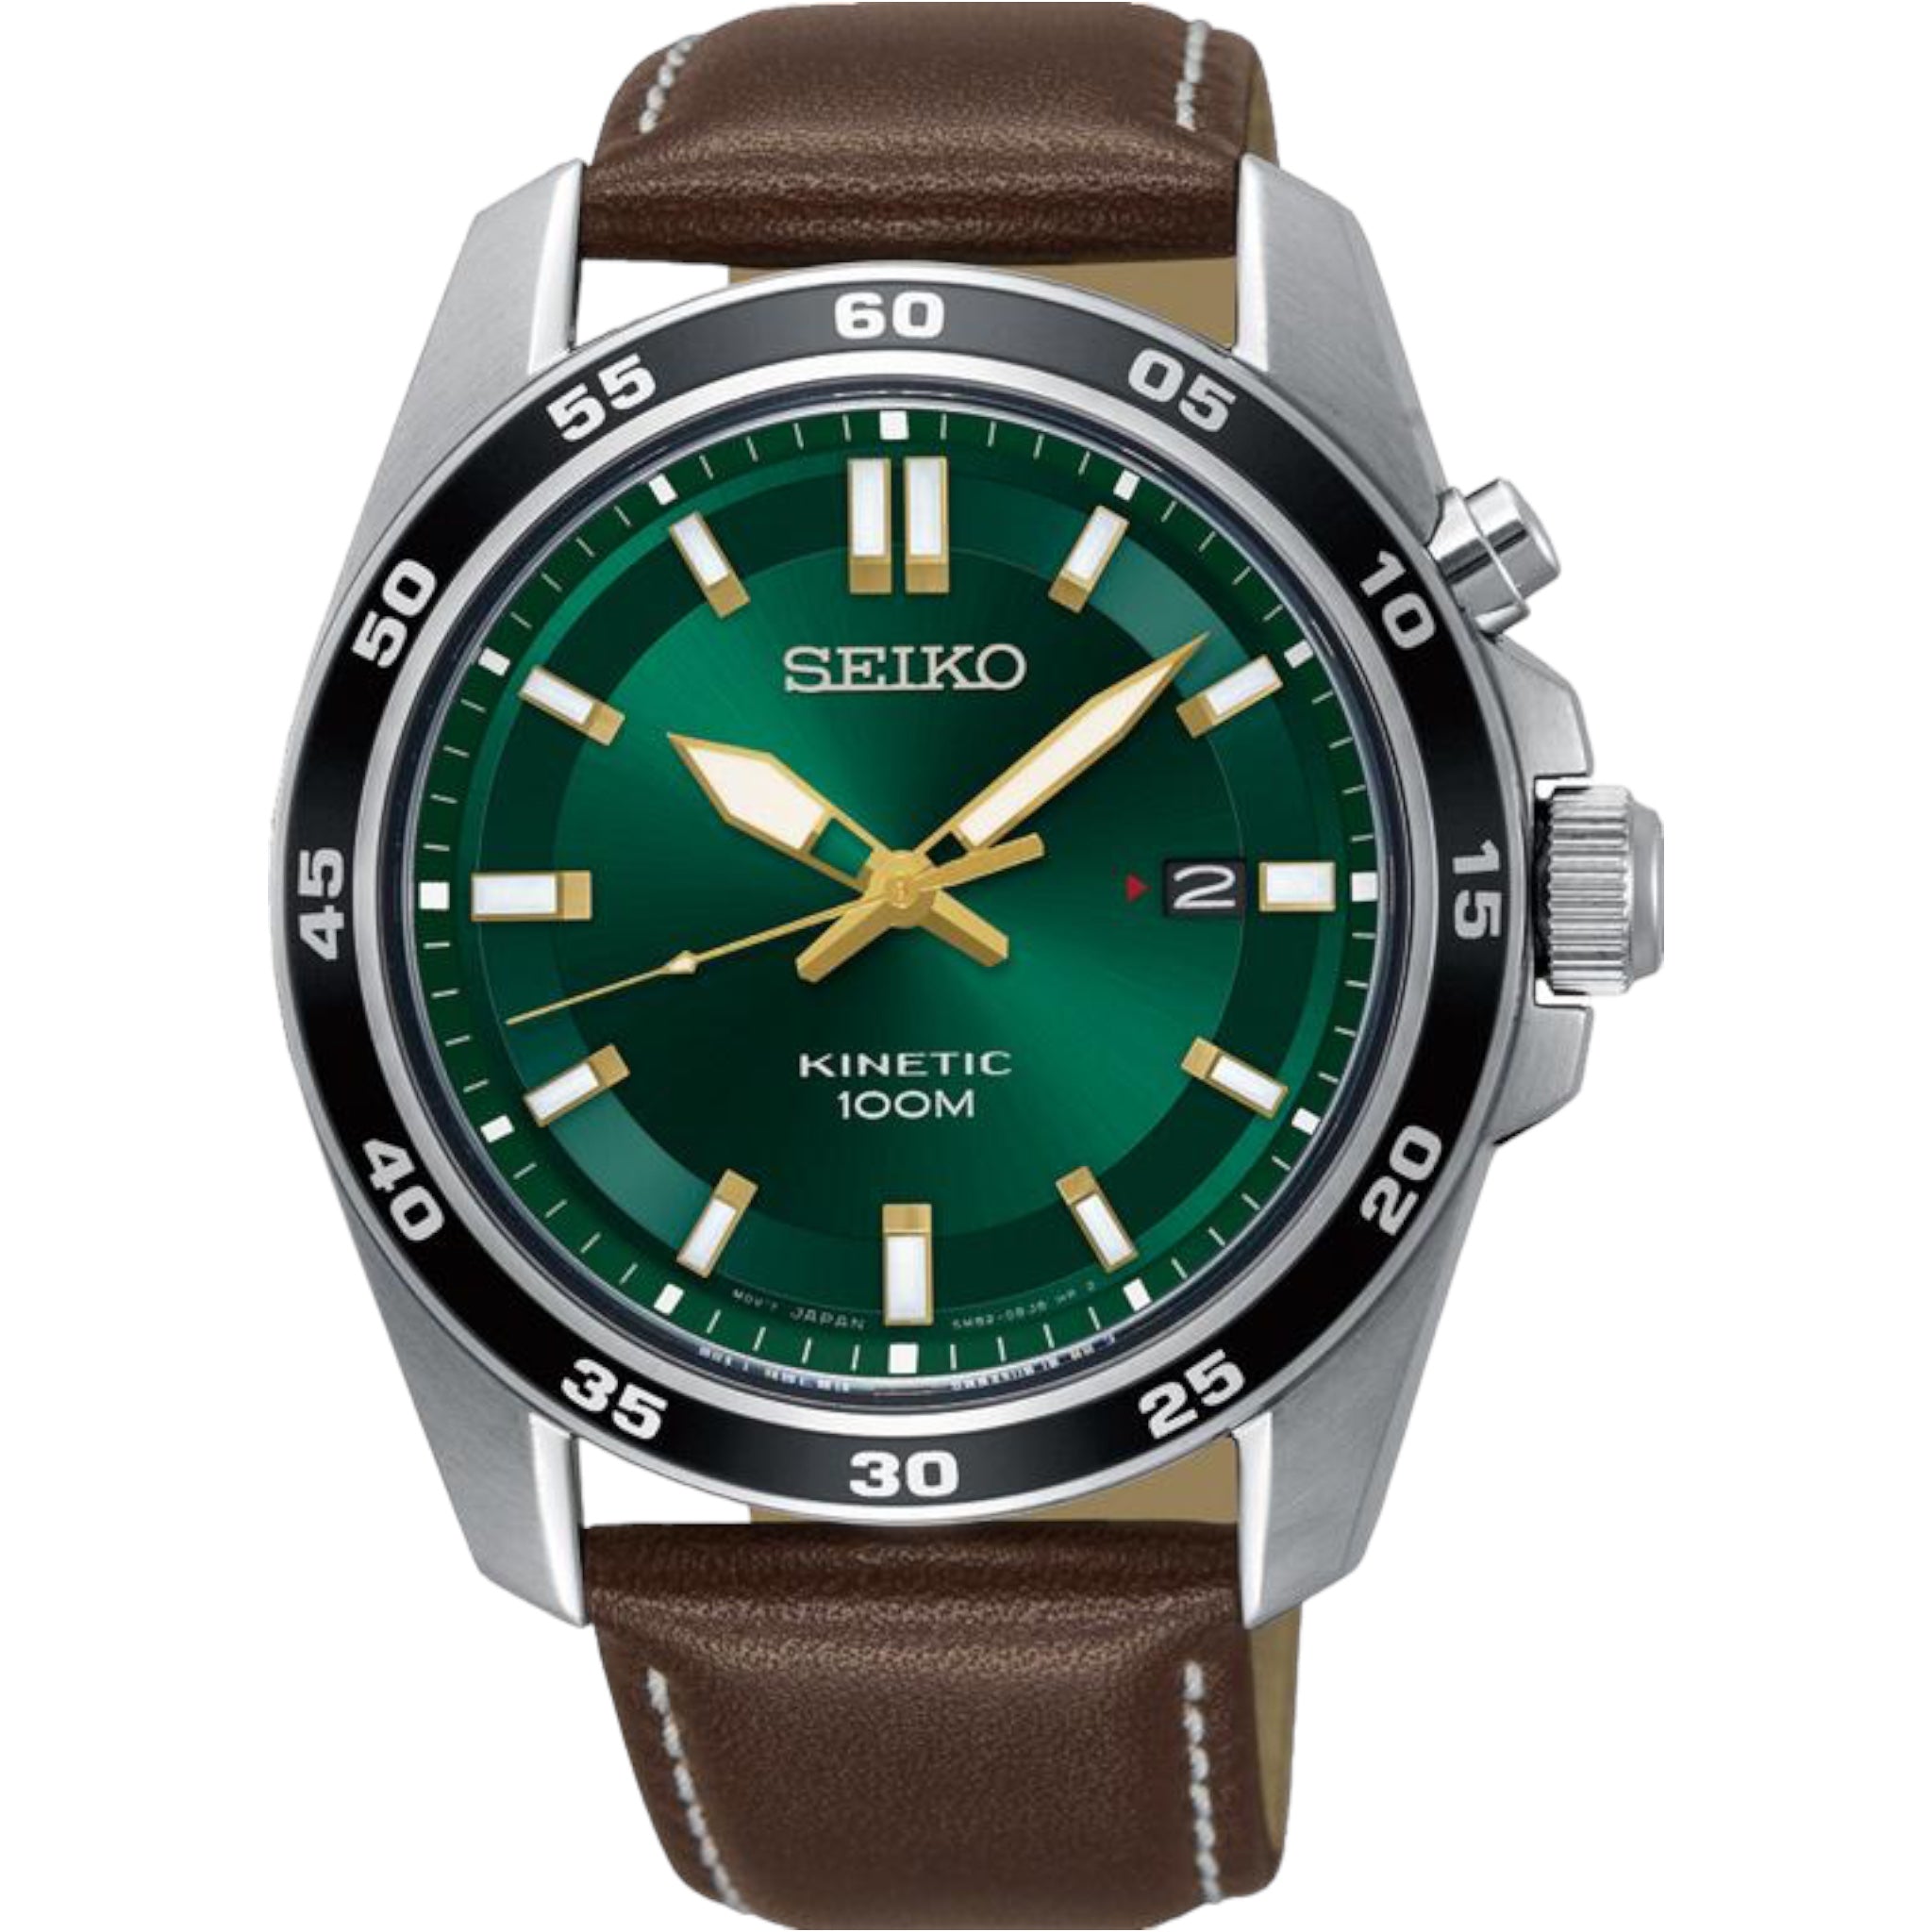 Seiko Sports Kinetic Men's Watch SKA791P1 Green